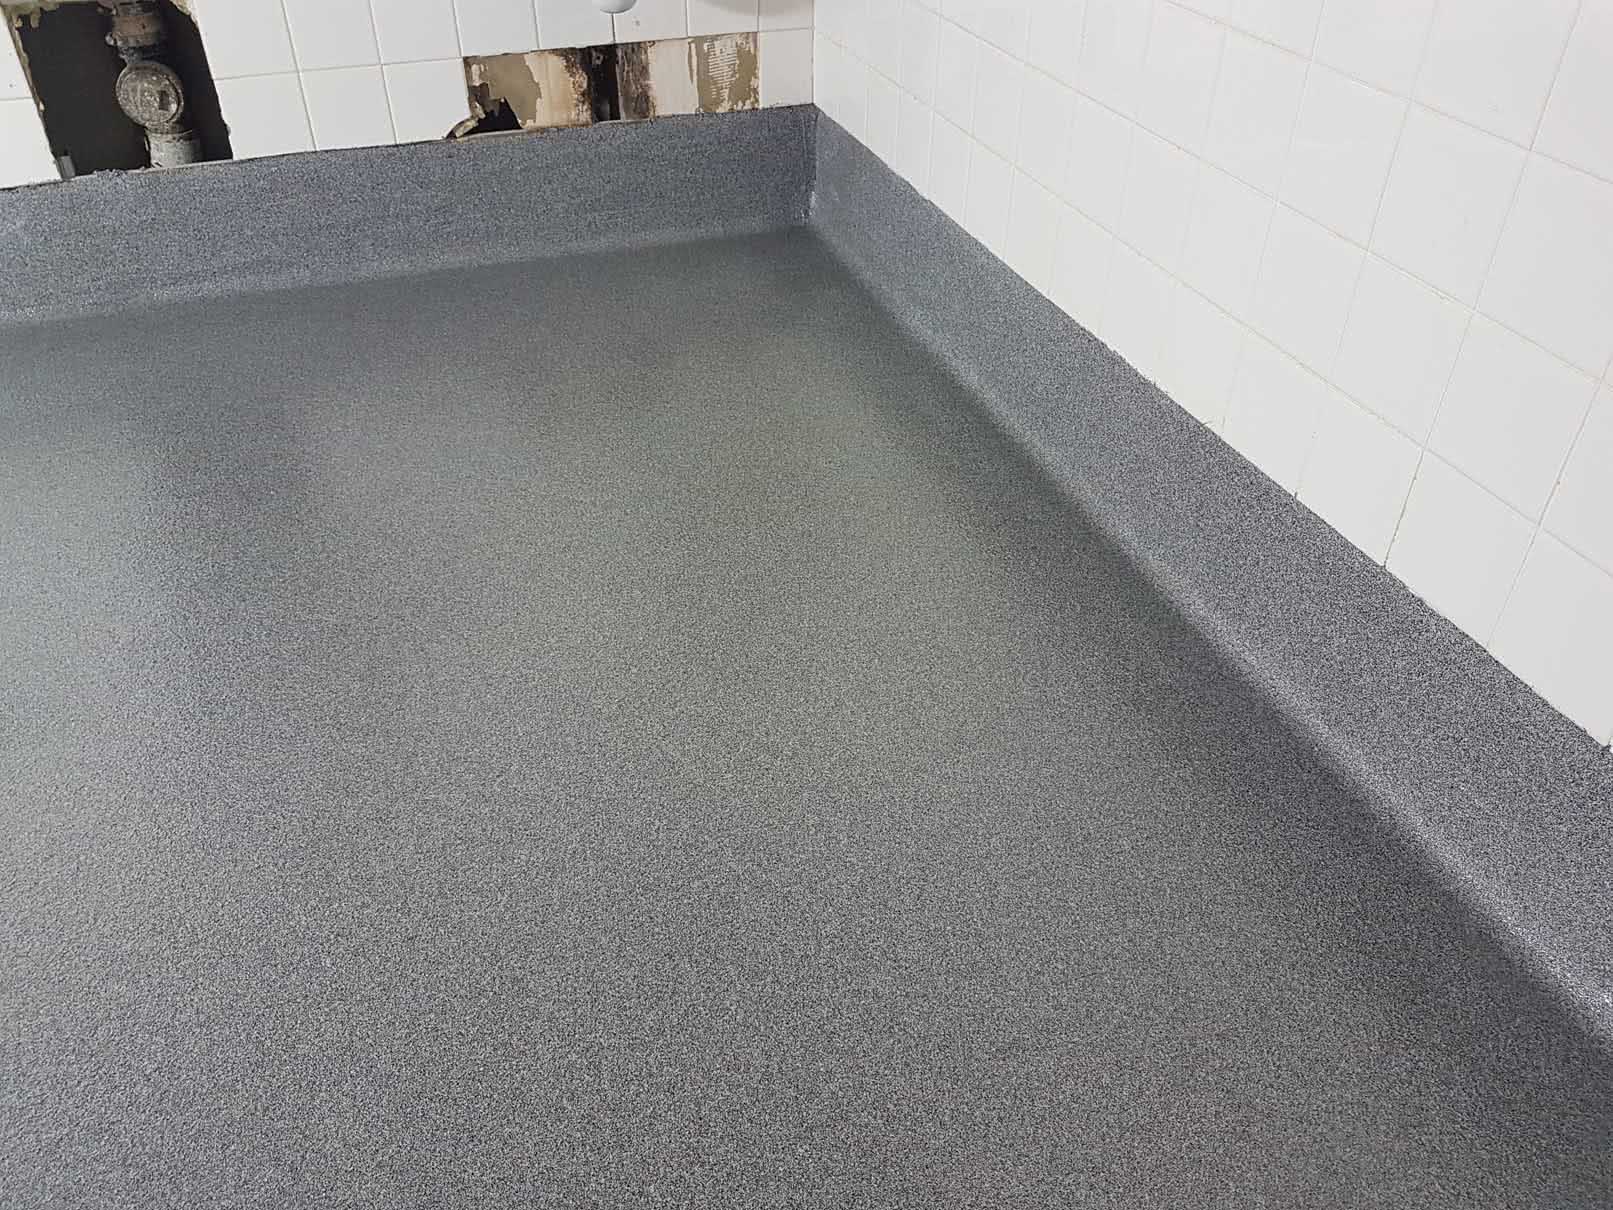 Concrete resurfacing and epoxy floor coating at Comox Recreation Centre